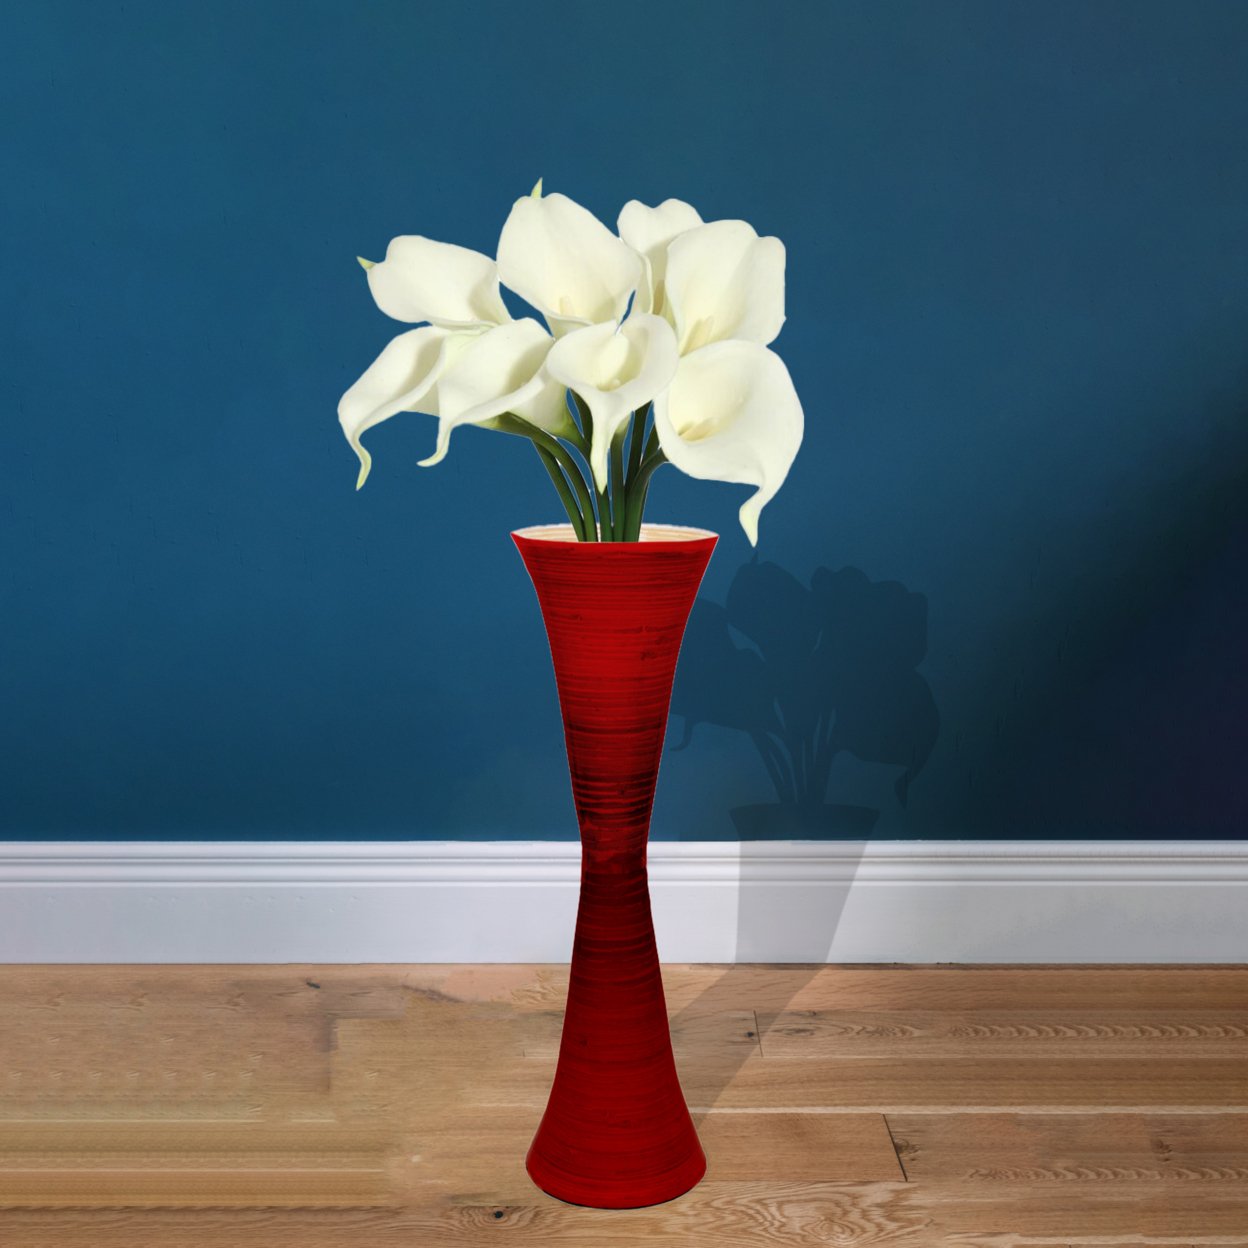 Decorative Modern Bamboo Display Floor Vase Hourglass Shape, 27 Inch - Natural